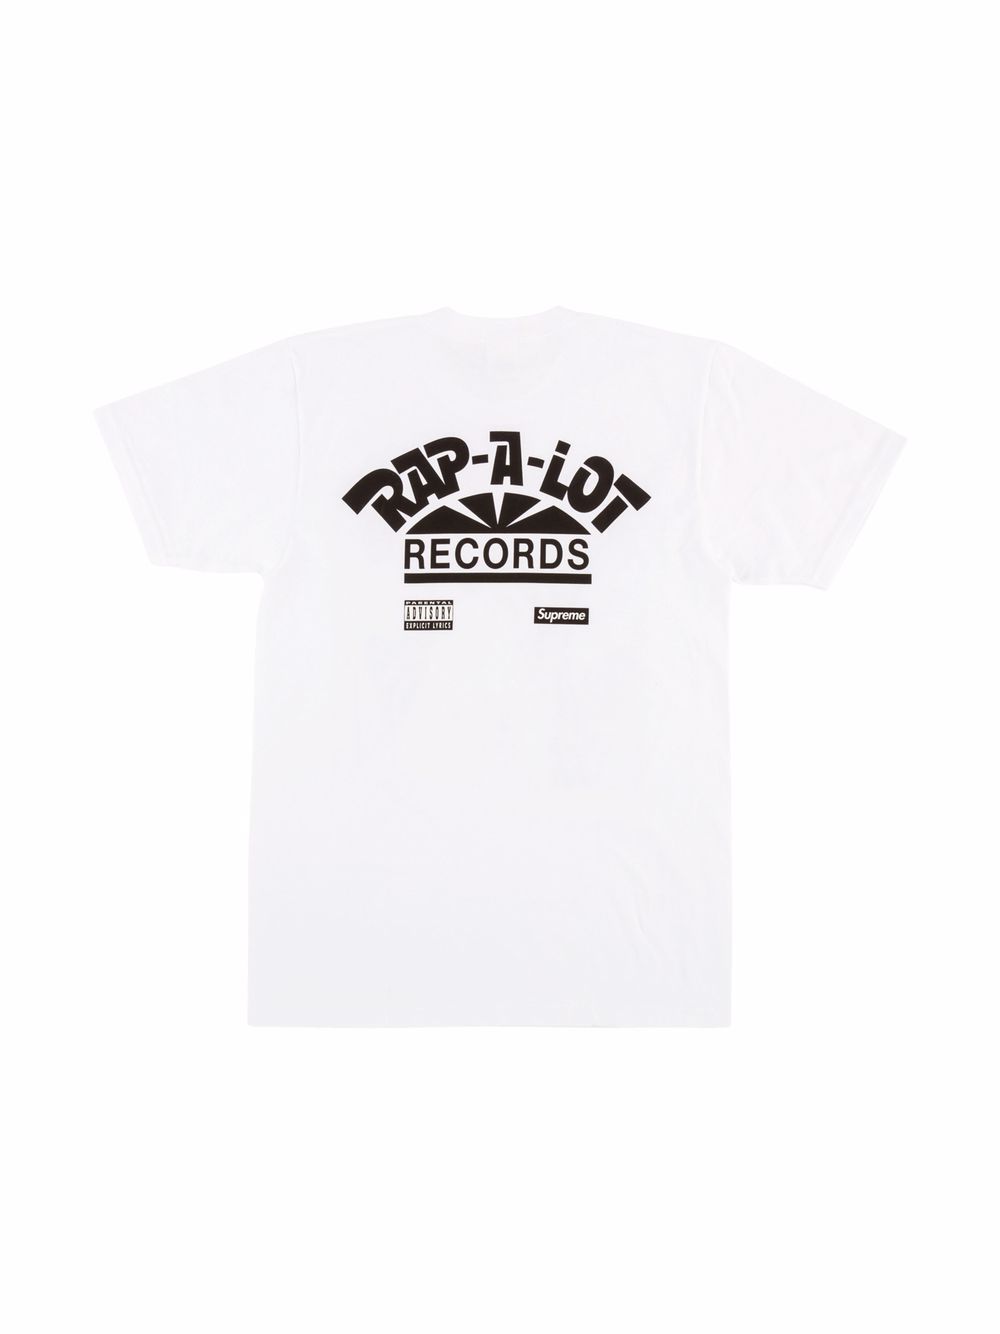 NWT Supreme Rap-A-Lot Records Geto Boys Red Box Logo T-Shirt M L SS17  AUTHENTIC